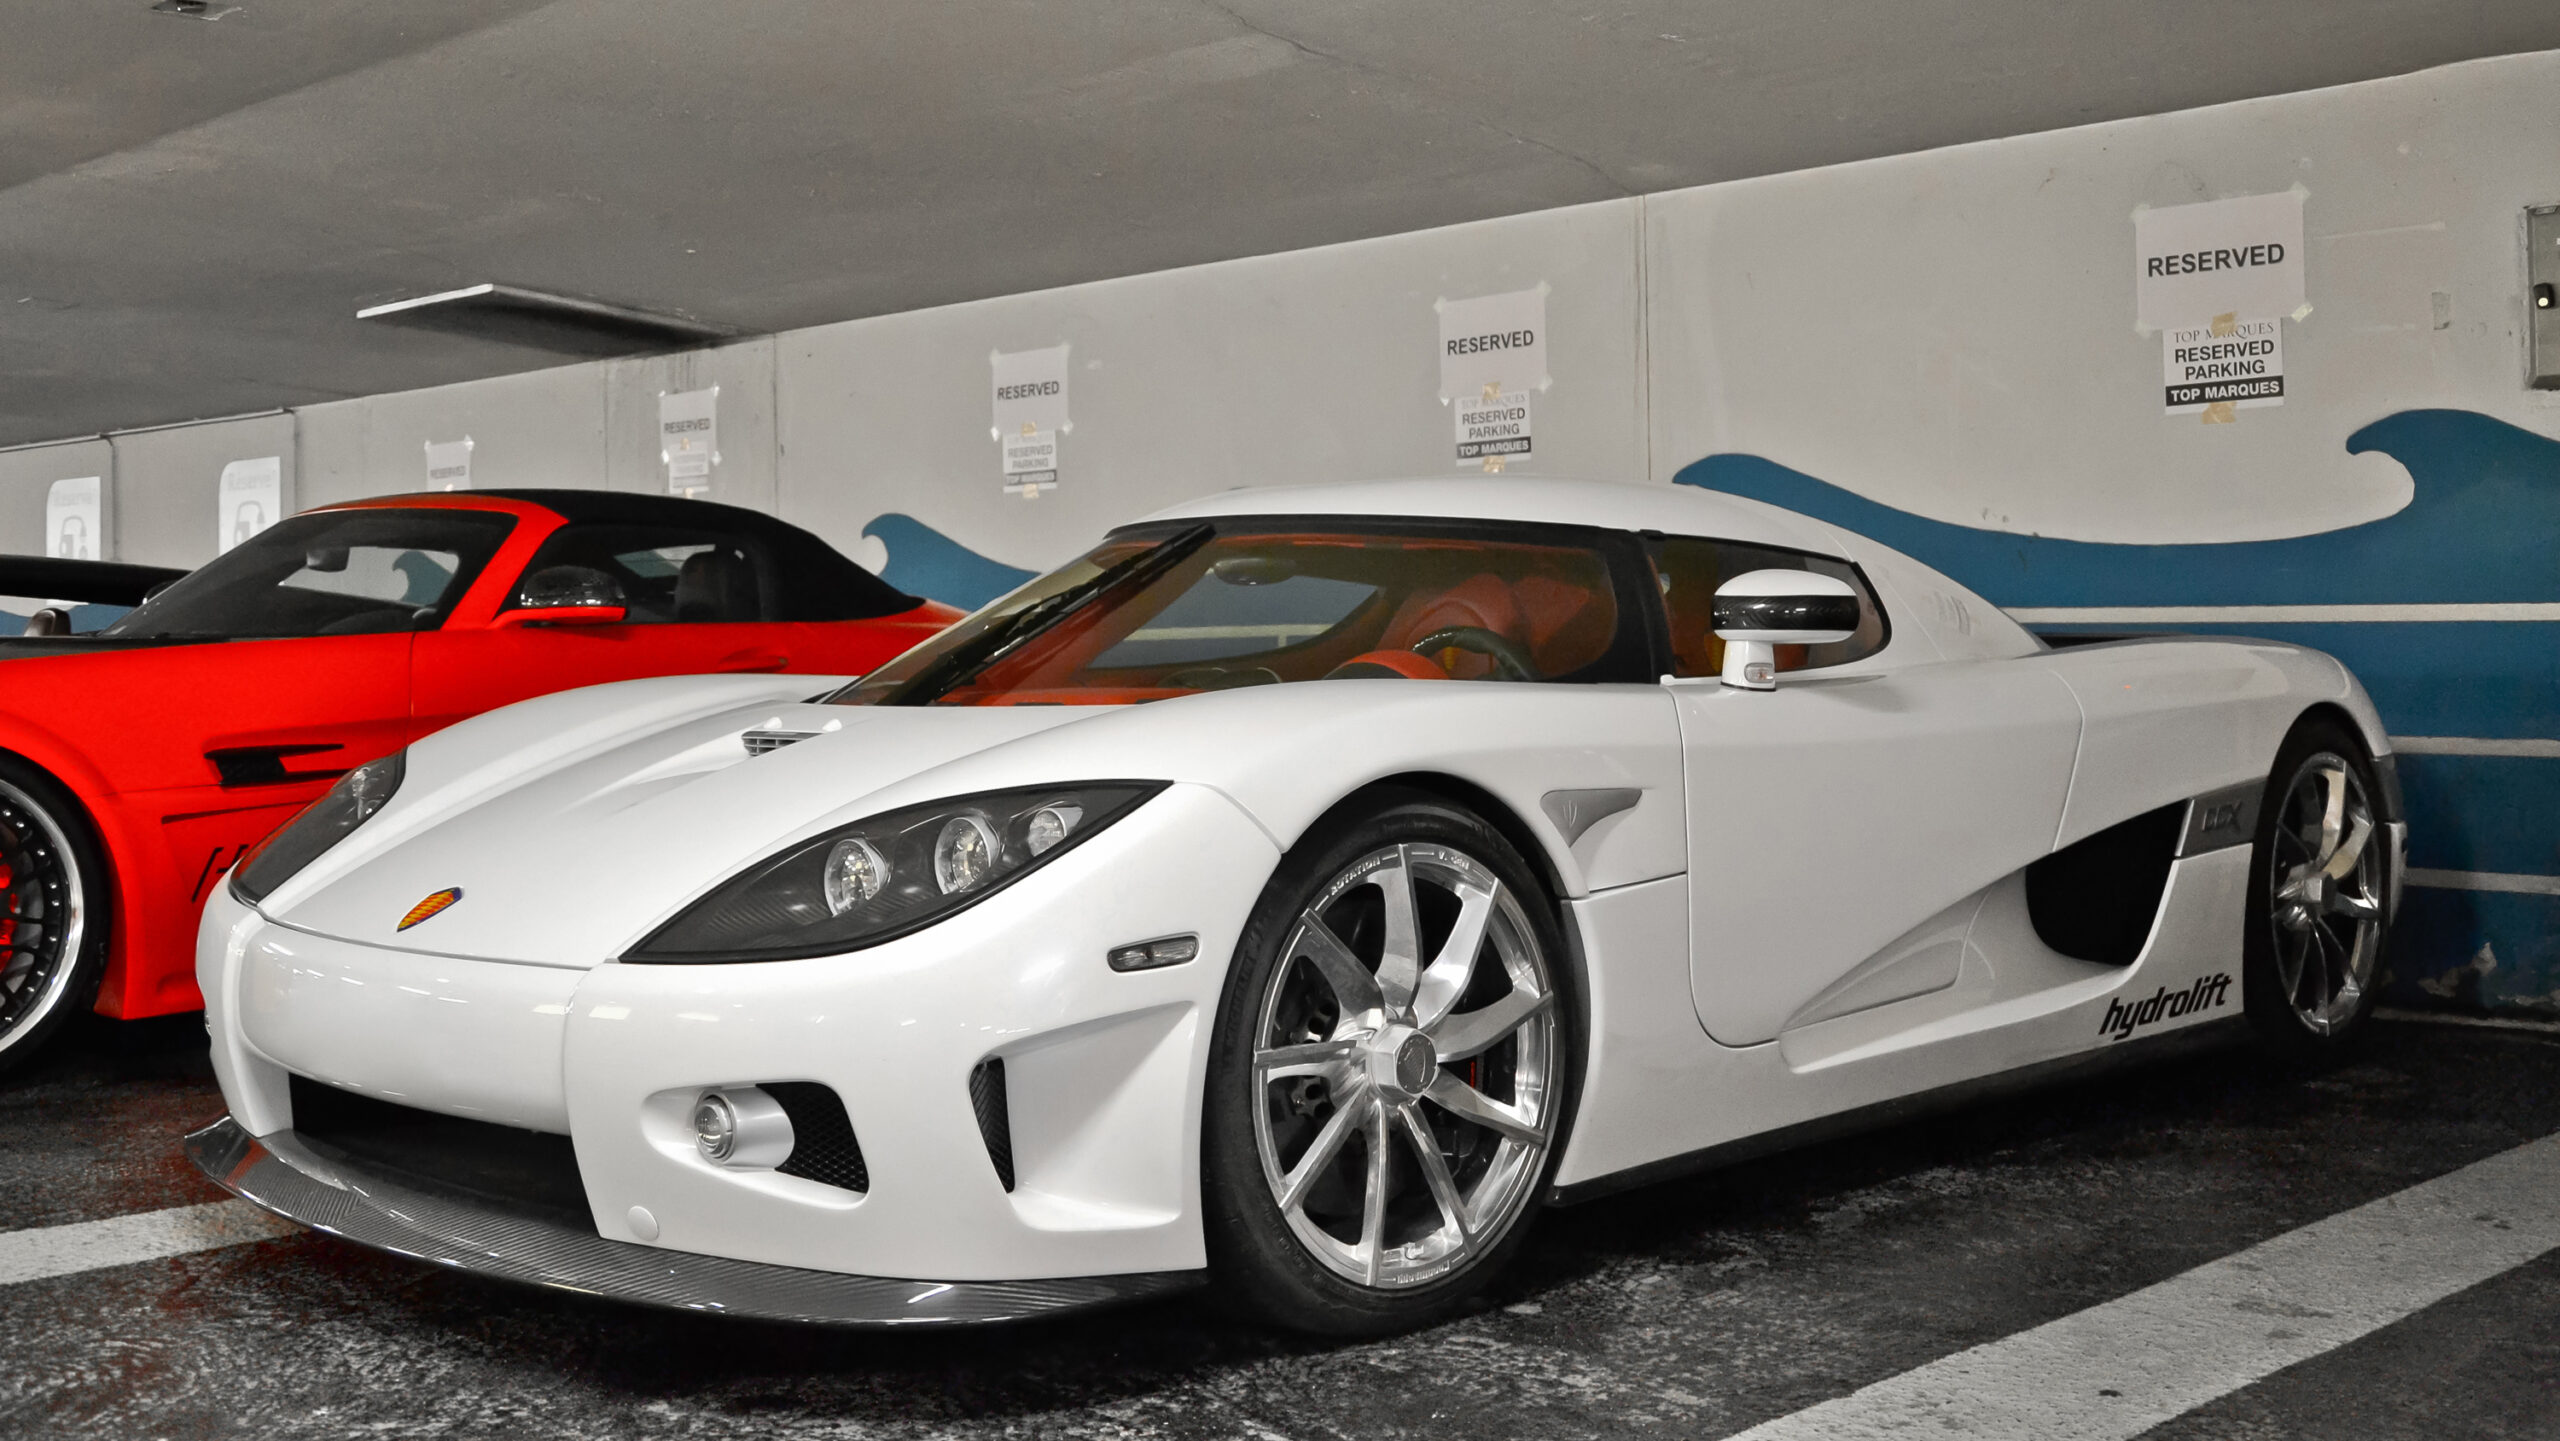 CCXR Trevita Koenigsegg $4.8 million Most Expensive Cars In The World